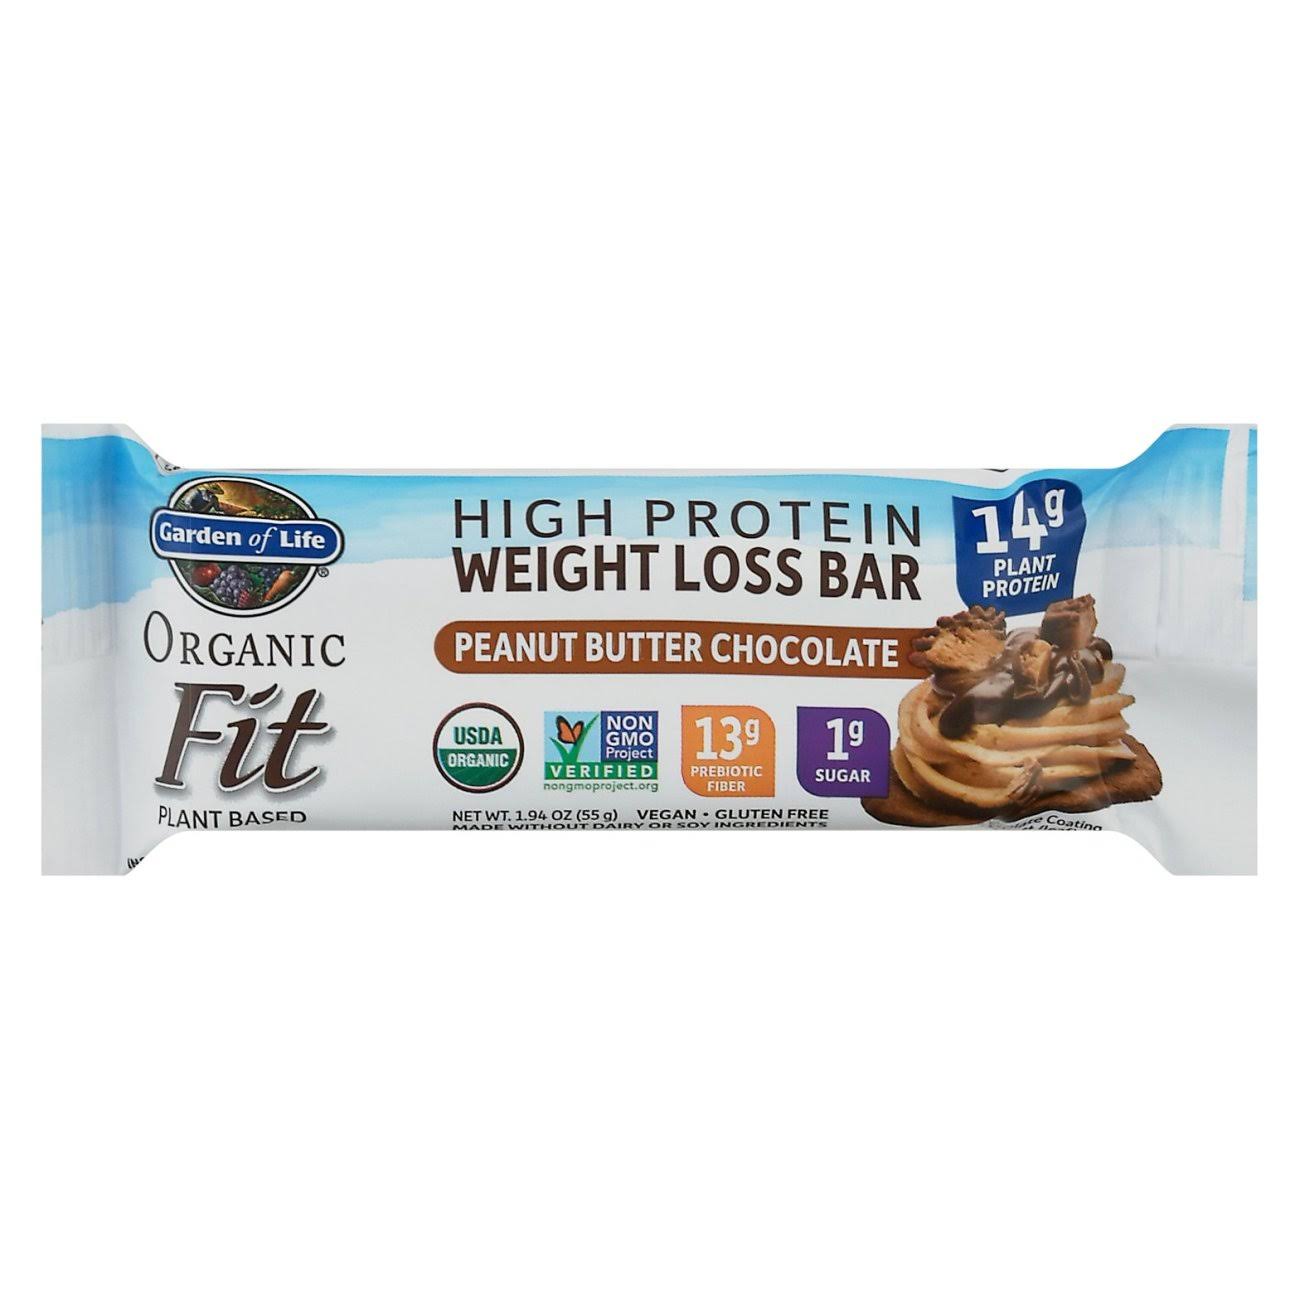 Garden of Life Organic Fit High Protein Weight Loss Bar - Peanut Butter Chocolate, 1.9oz